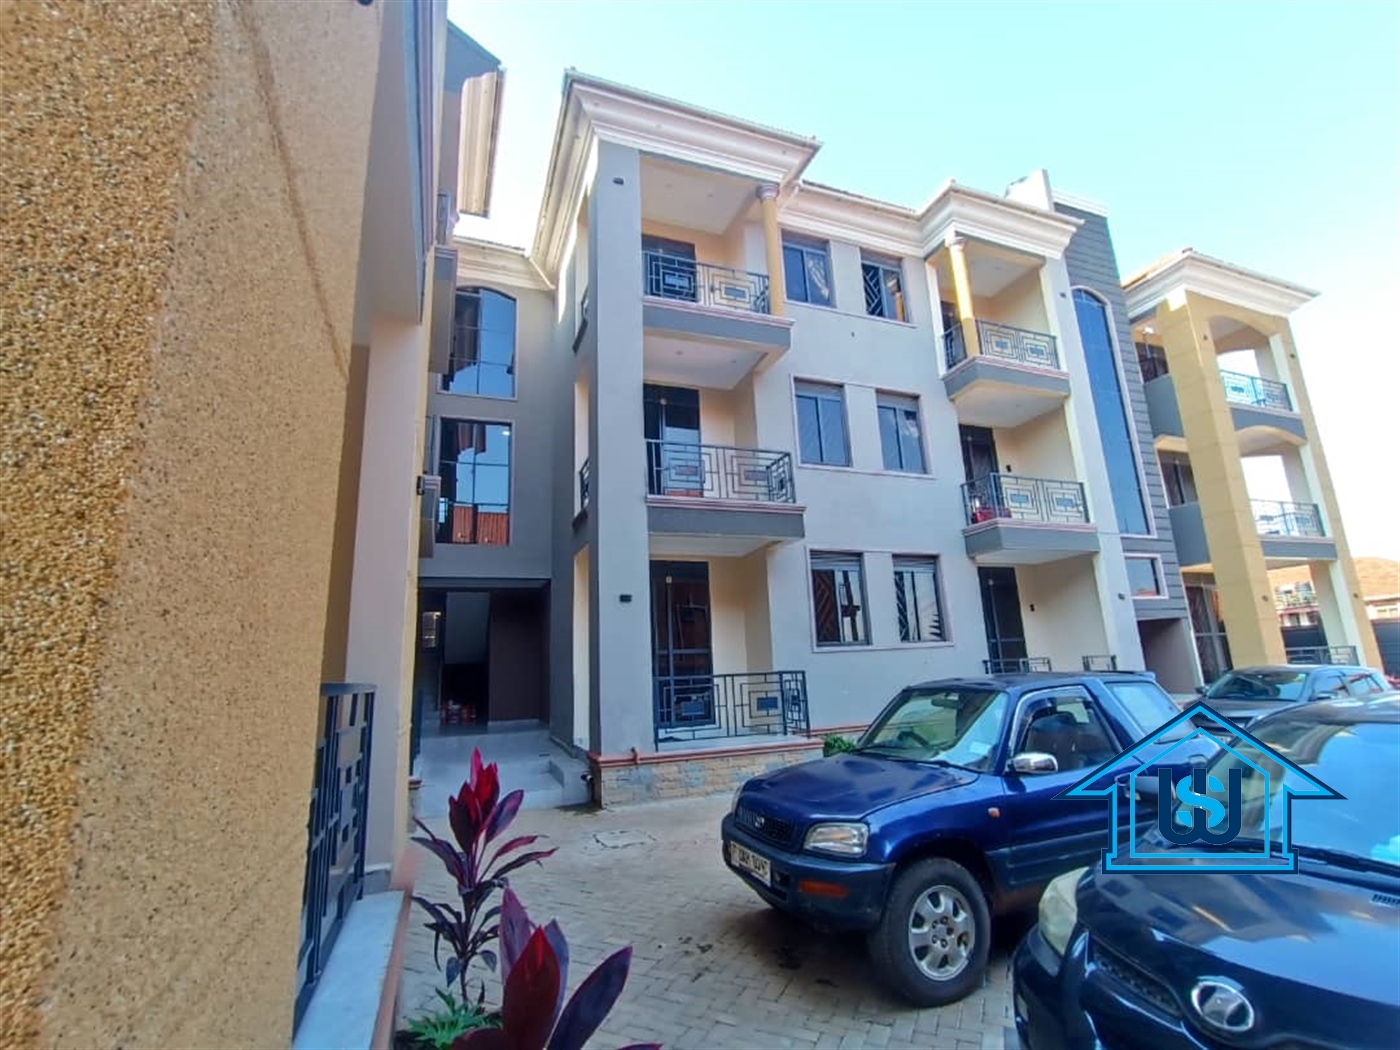 Apartment block for sale in Ntinda Wakiso